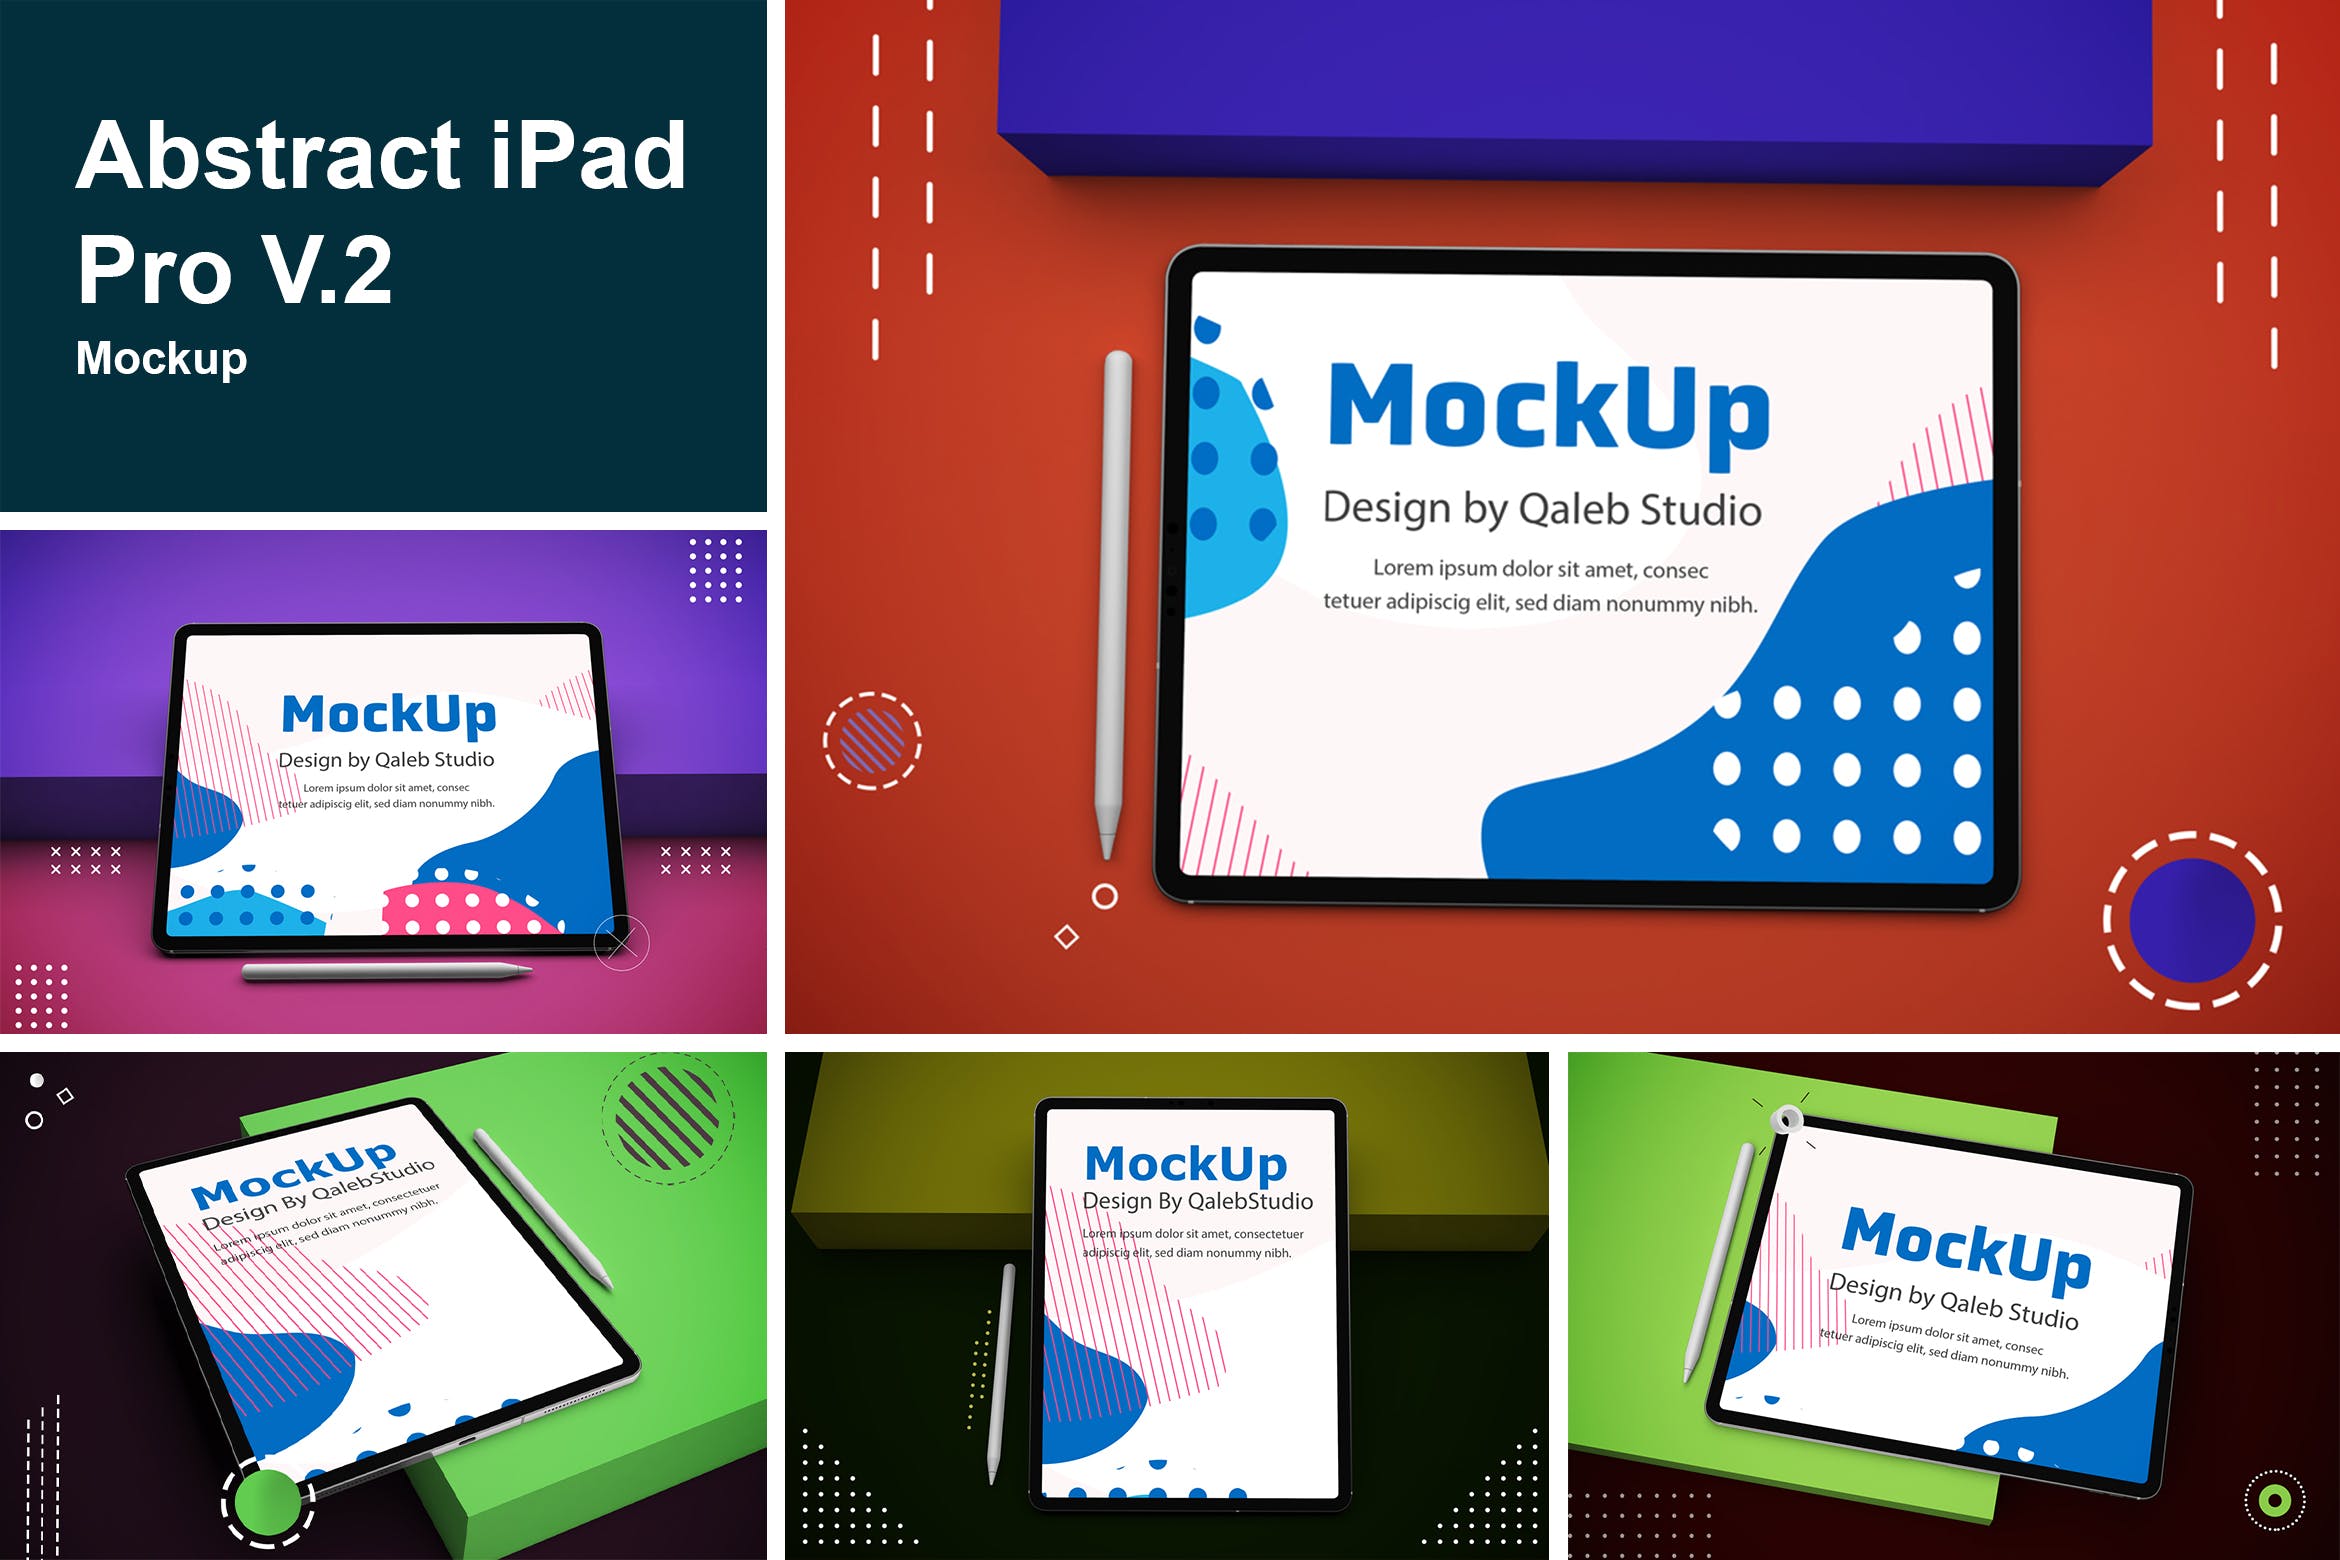 抽象设计风格iPad Pro平板电脑屏幕效果图素材库精选样机v2 Abstract iPad Pro V.2 Mockup插图